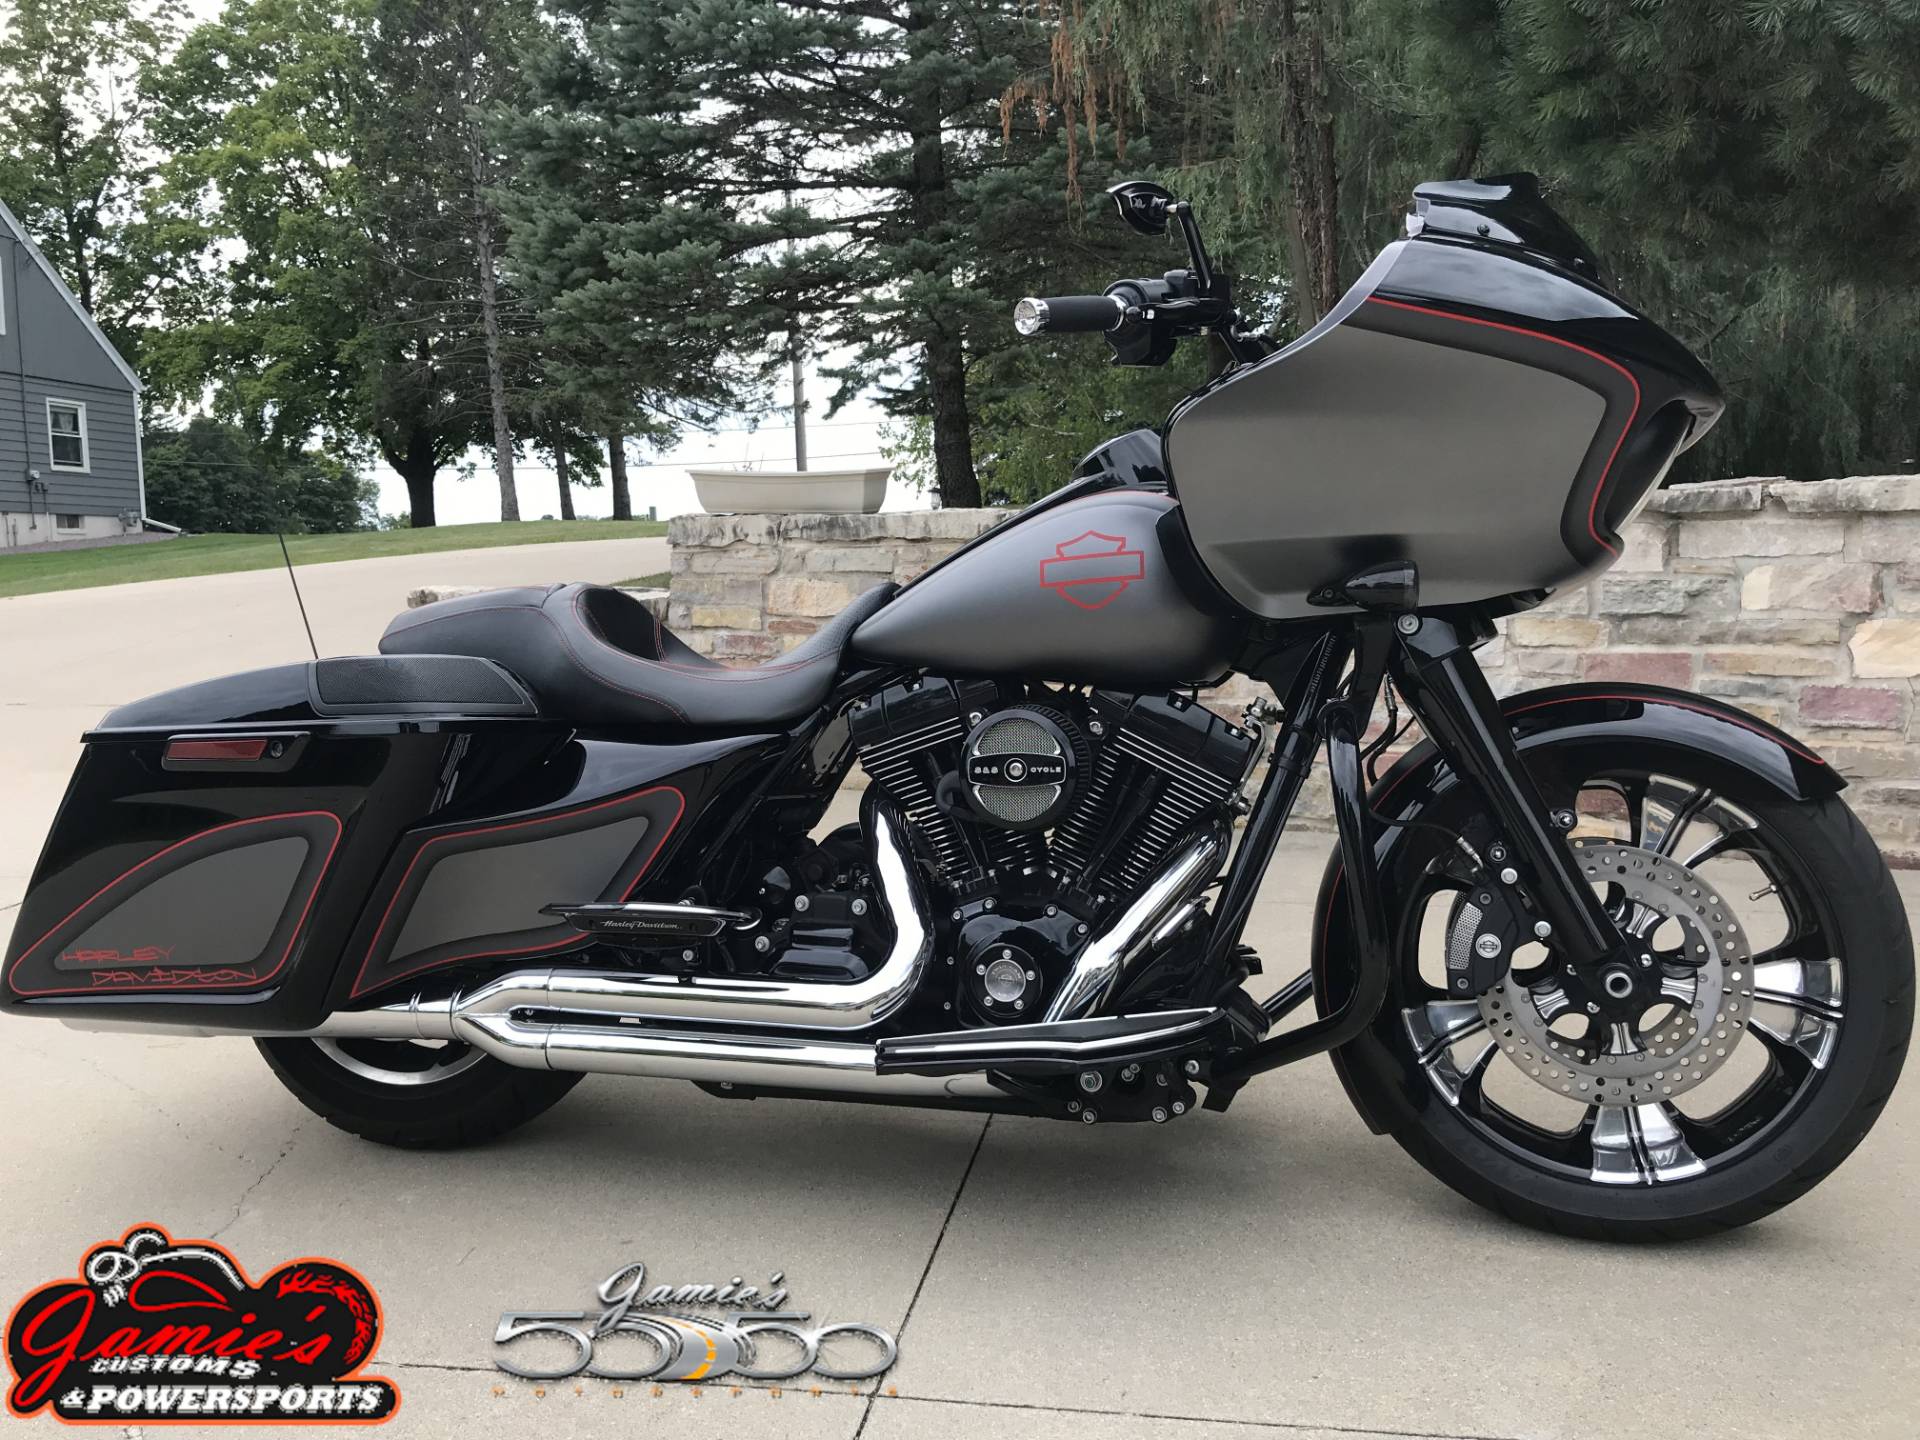 Used 2015 Harley Davidson Road Glide Special Motorcycles In Big Bend Wi 2911 Vivid Black